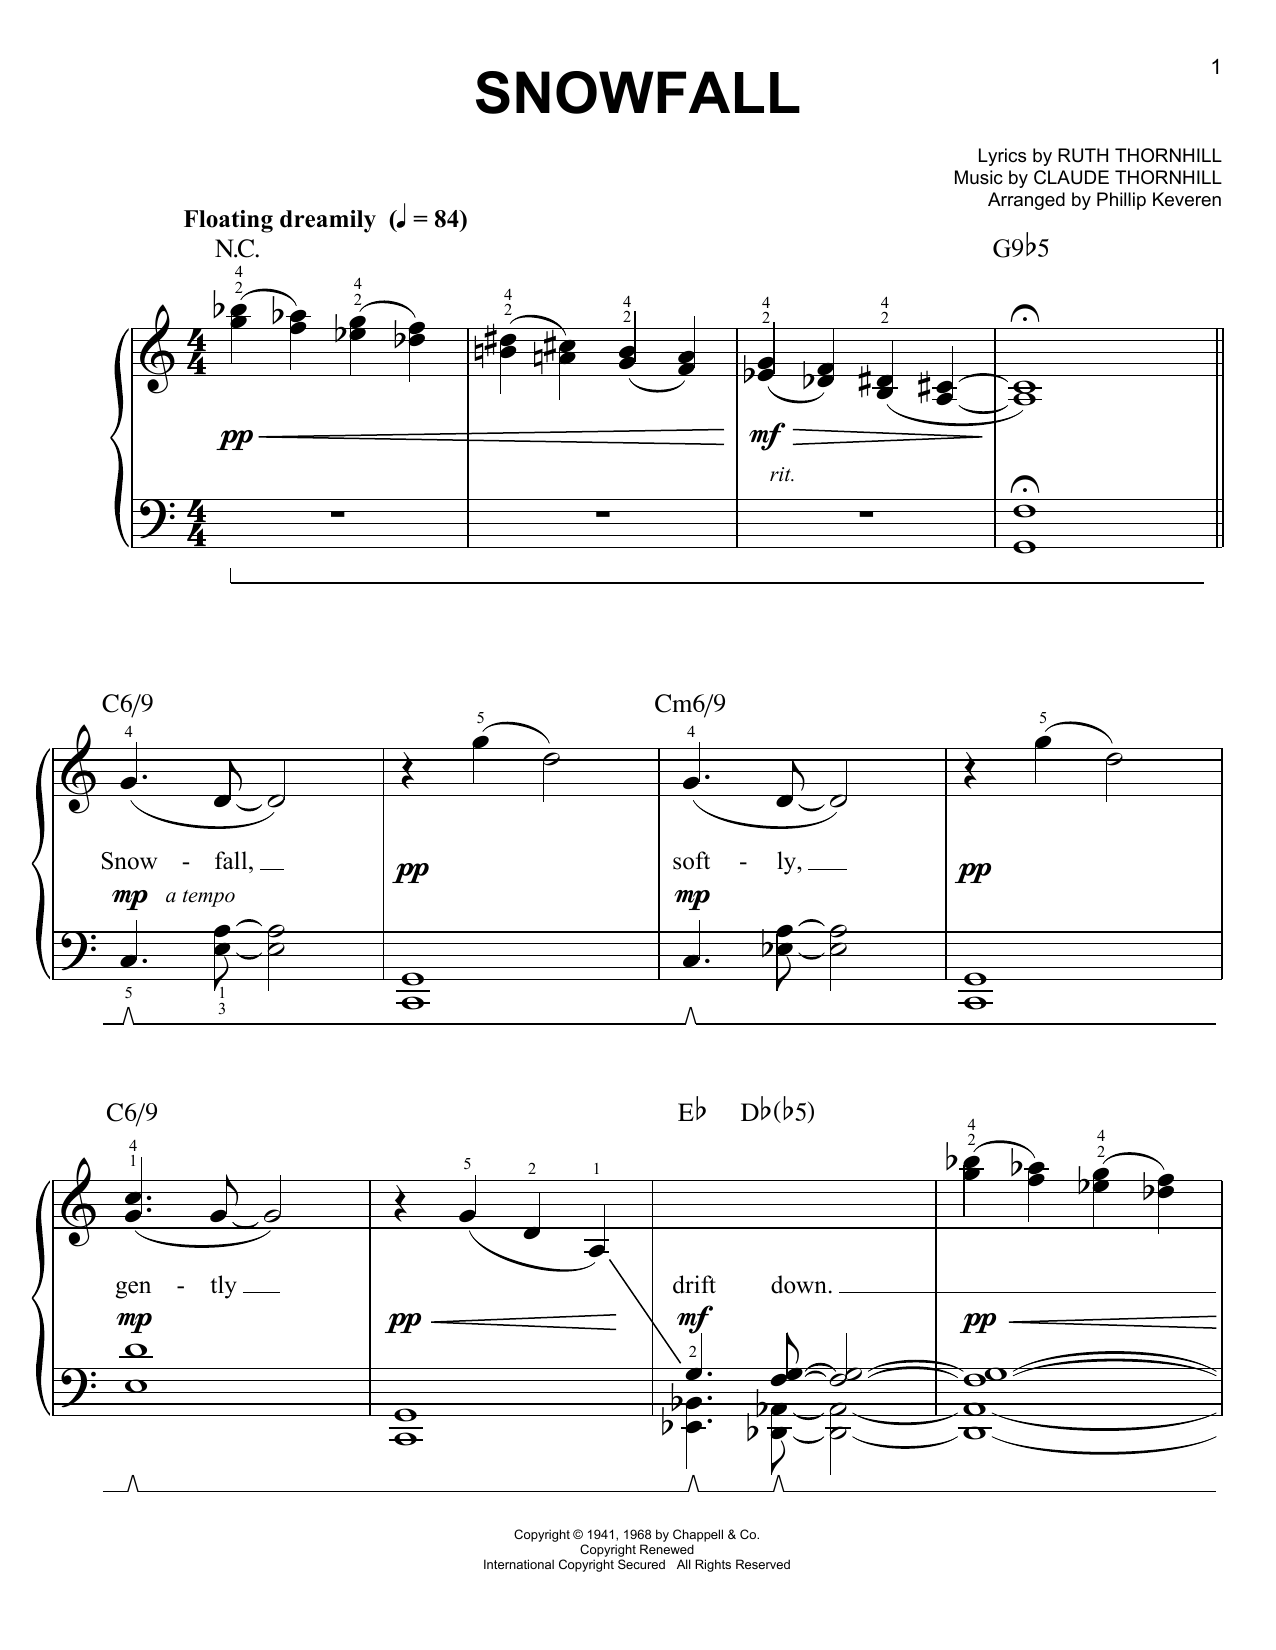 Tony Bennett Snowfall [Jazz version] (arr. Phillip Keveren) Sheet Music Notes & Chords for Easy Piano - Download or Print PDF